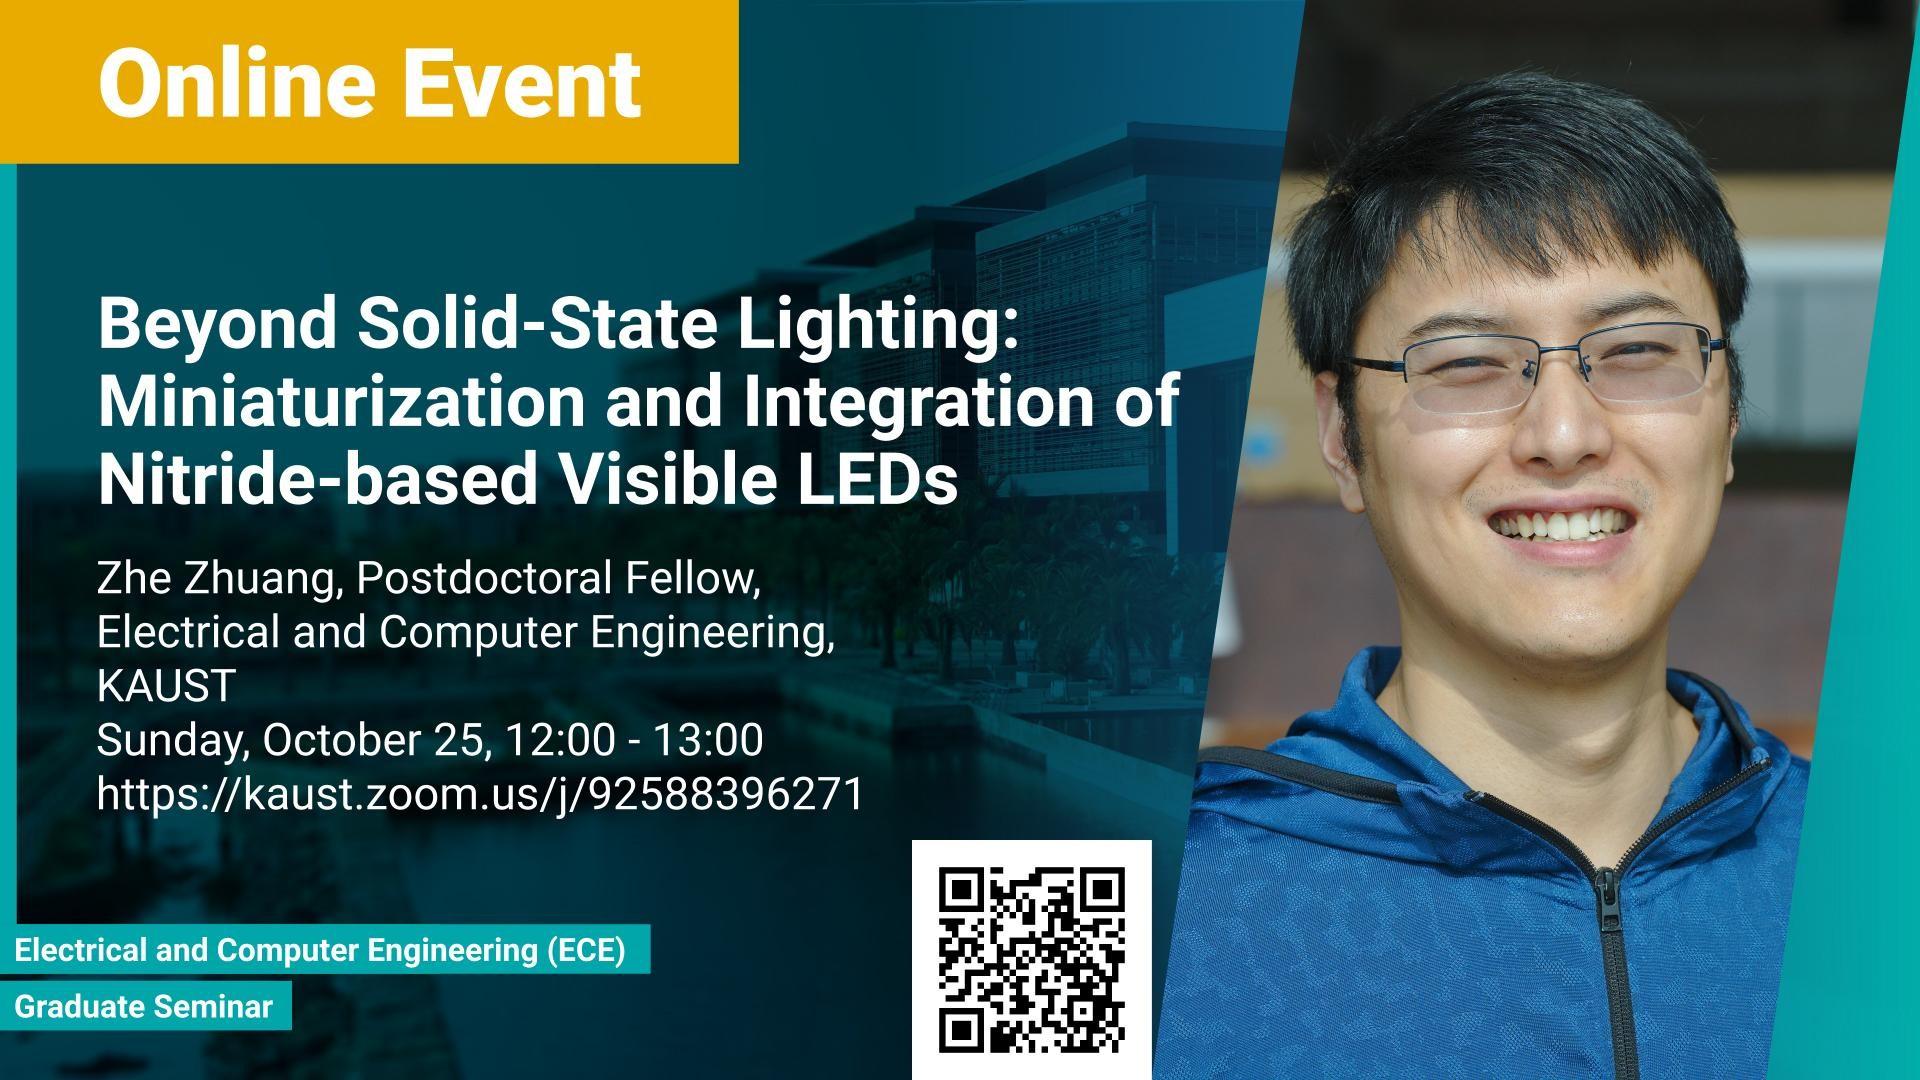 KAUST-CEMSE-ECE-Graduate-Seminar-ZheZhuang-Beyond Solid-State Lighting Miniaturization and Integration of Nitride-based Visible LEDs.jpg